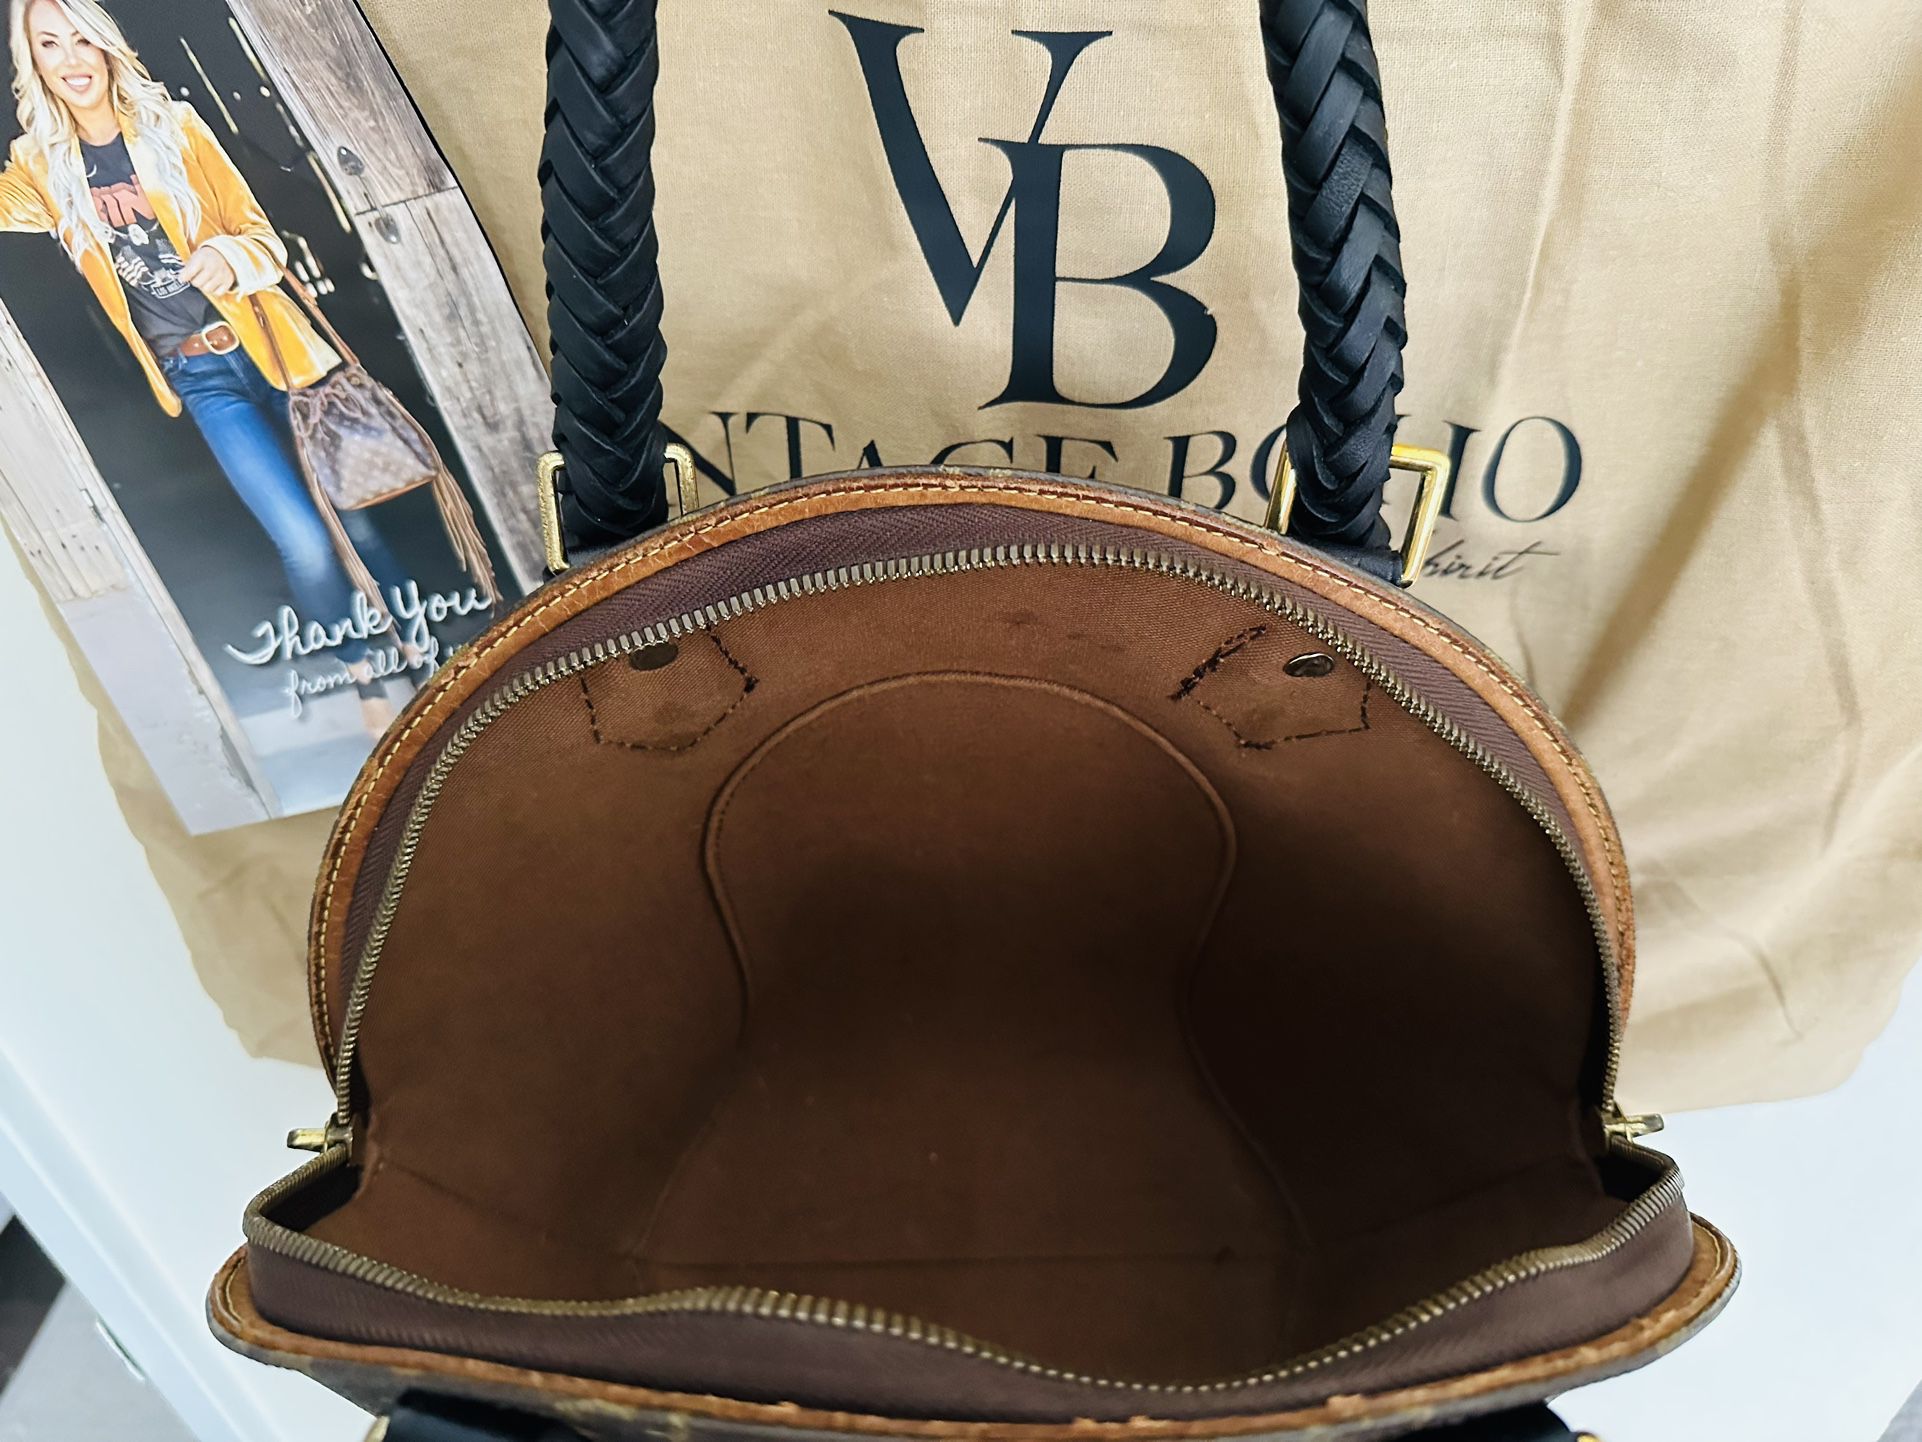 Authentic Louis Vuitton Vintage Boho bag - general for sale - by